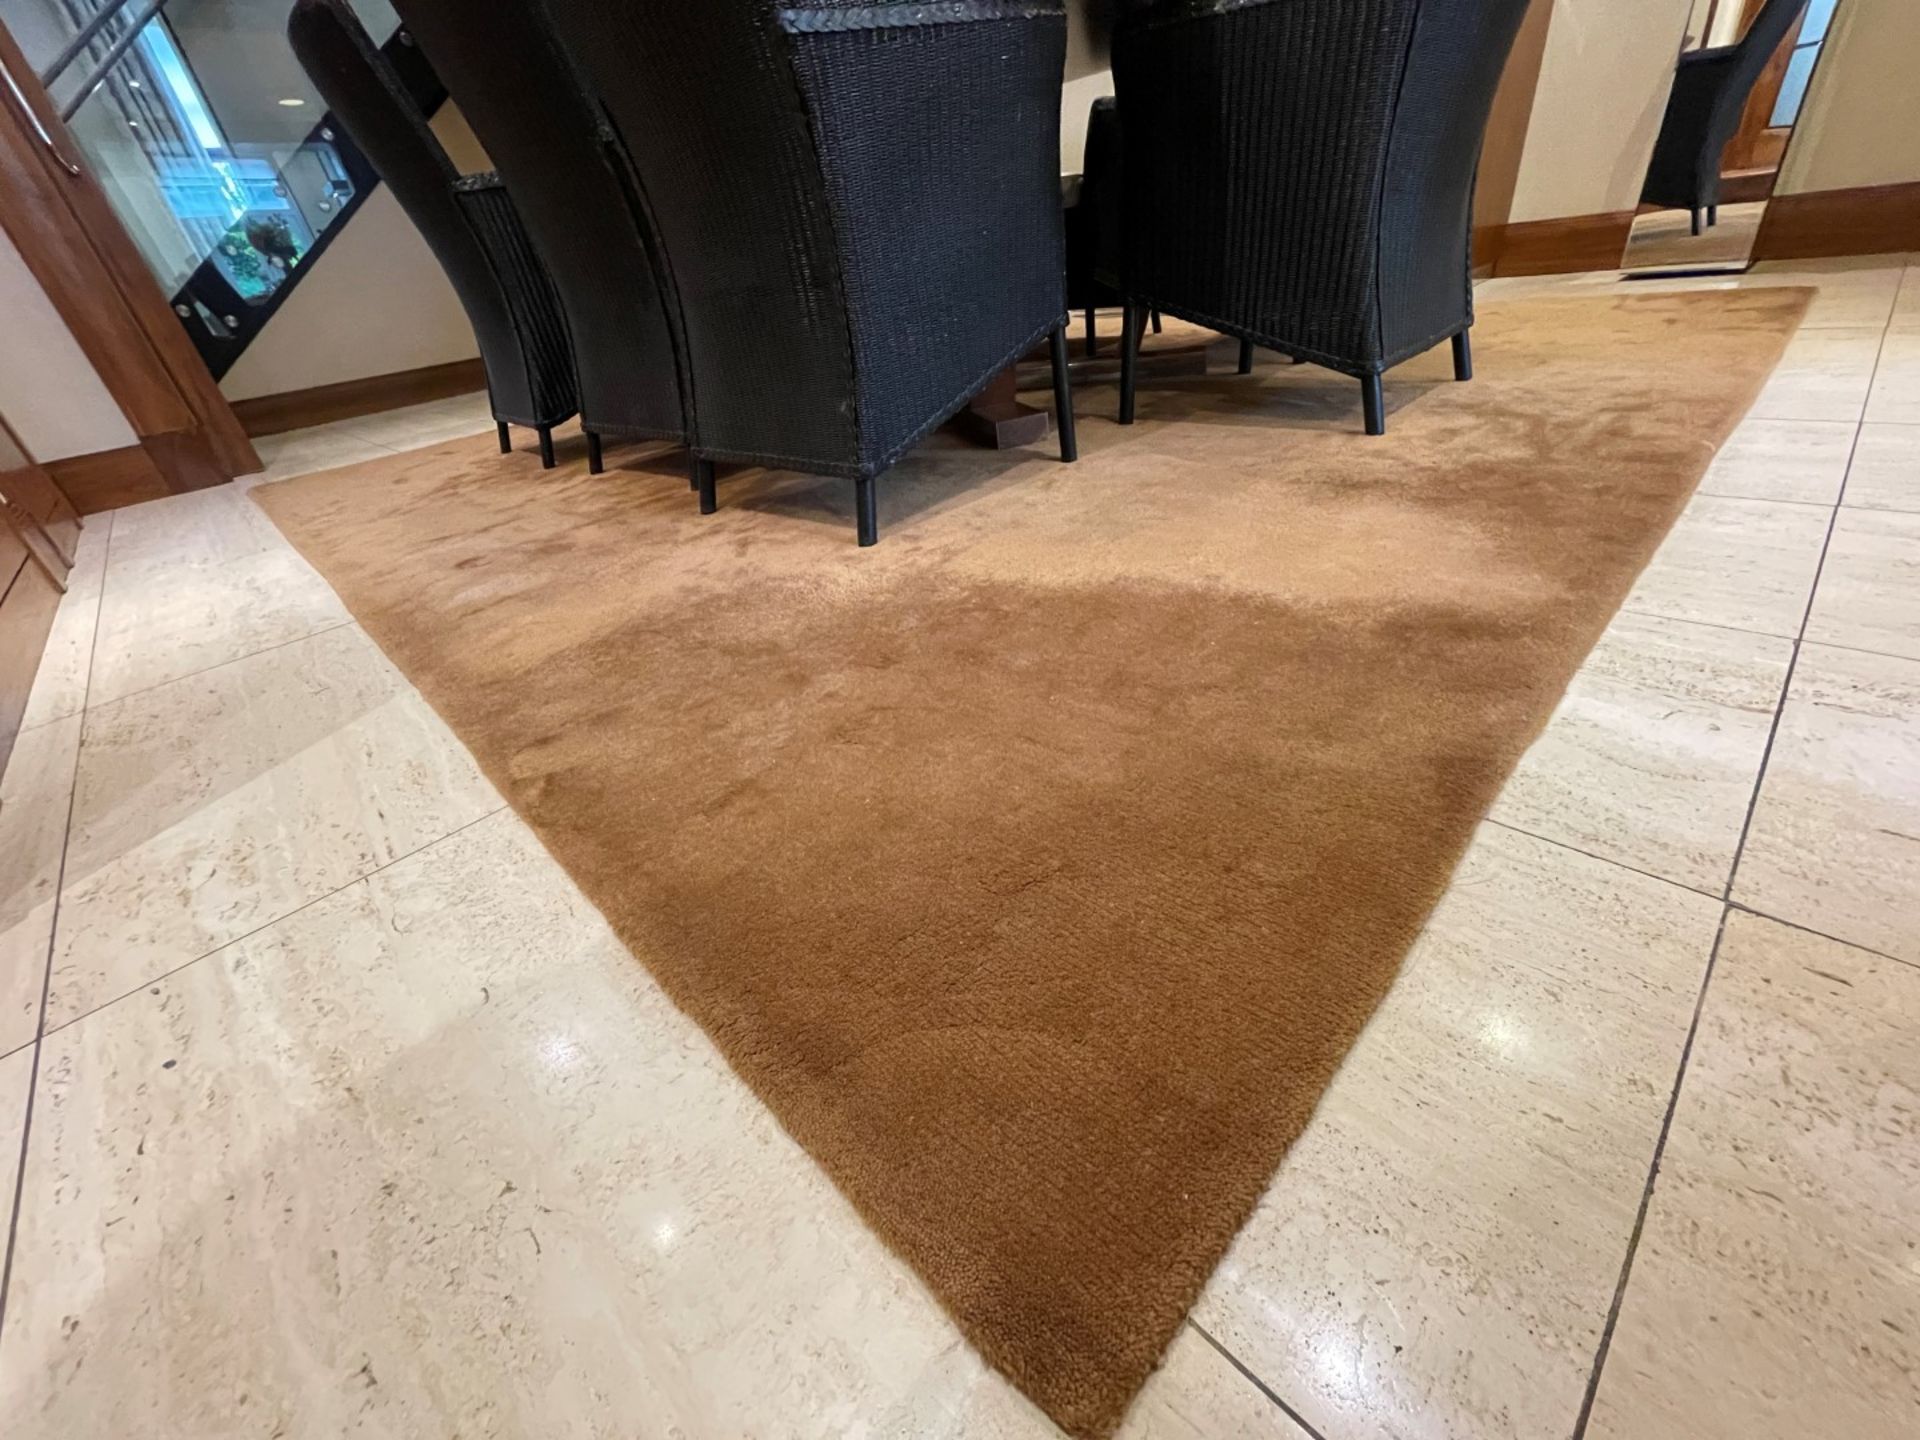 1 x Large Premium Carpet In Light Brown - Dimensions: 340cm / 300cm - Ref: SGV132-GF/BDR - CL672 - - Image 2 of 6